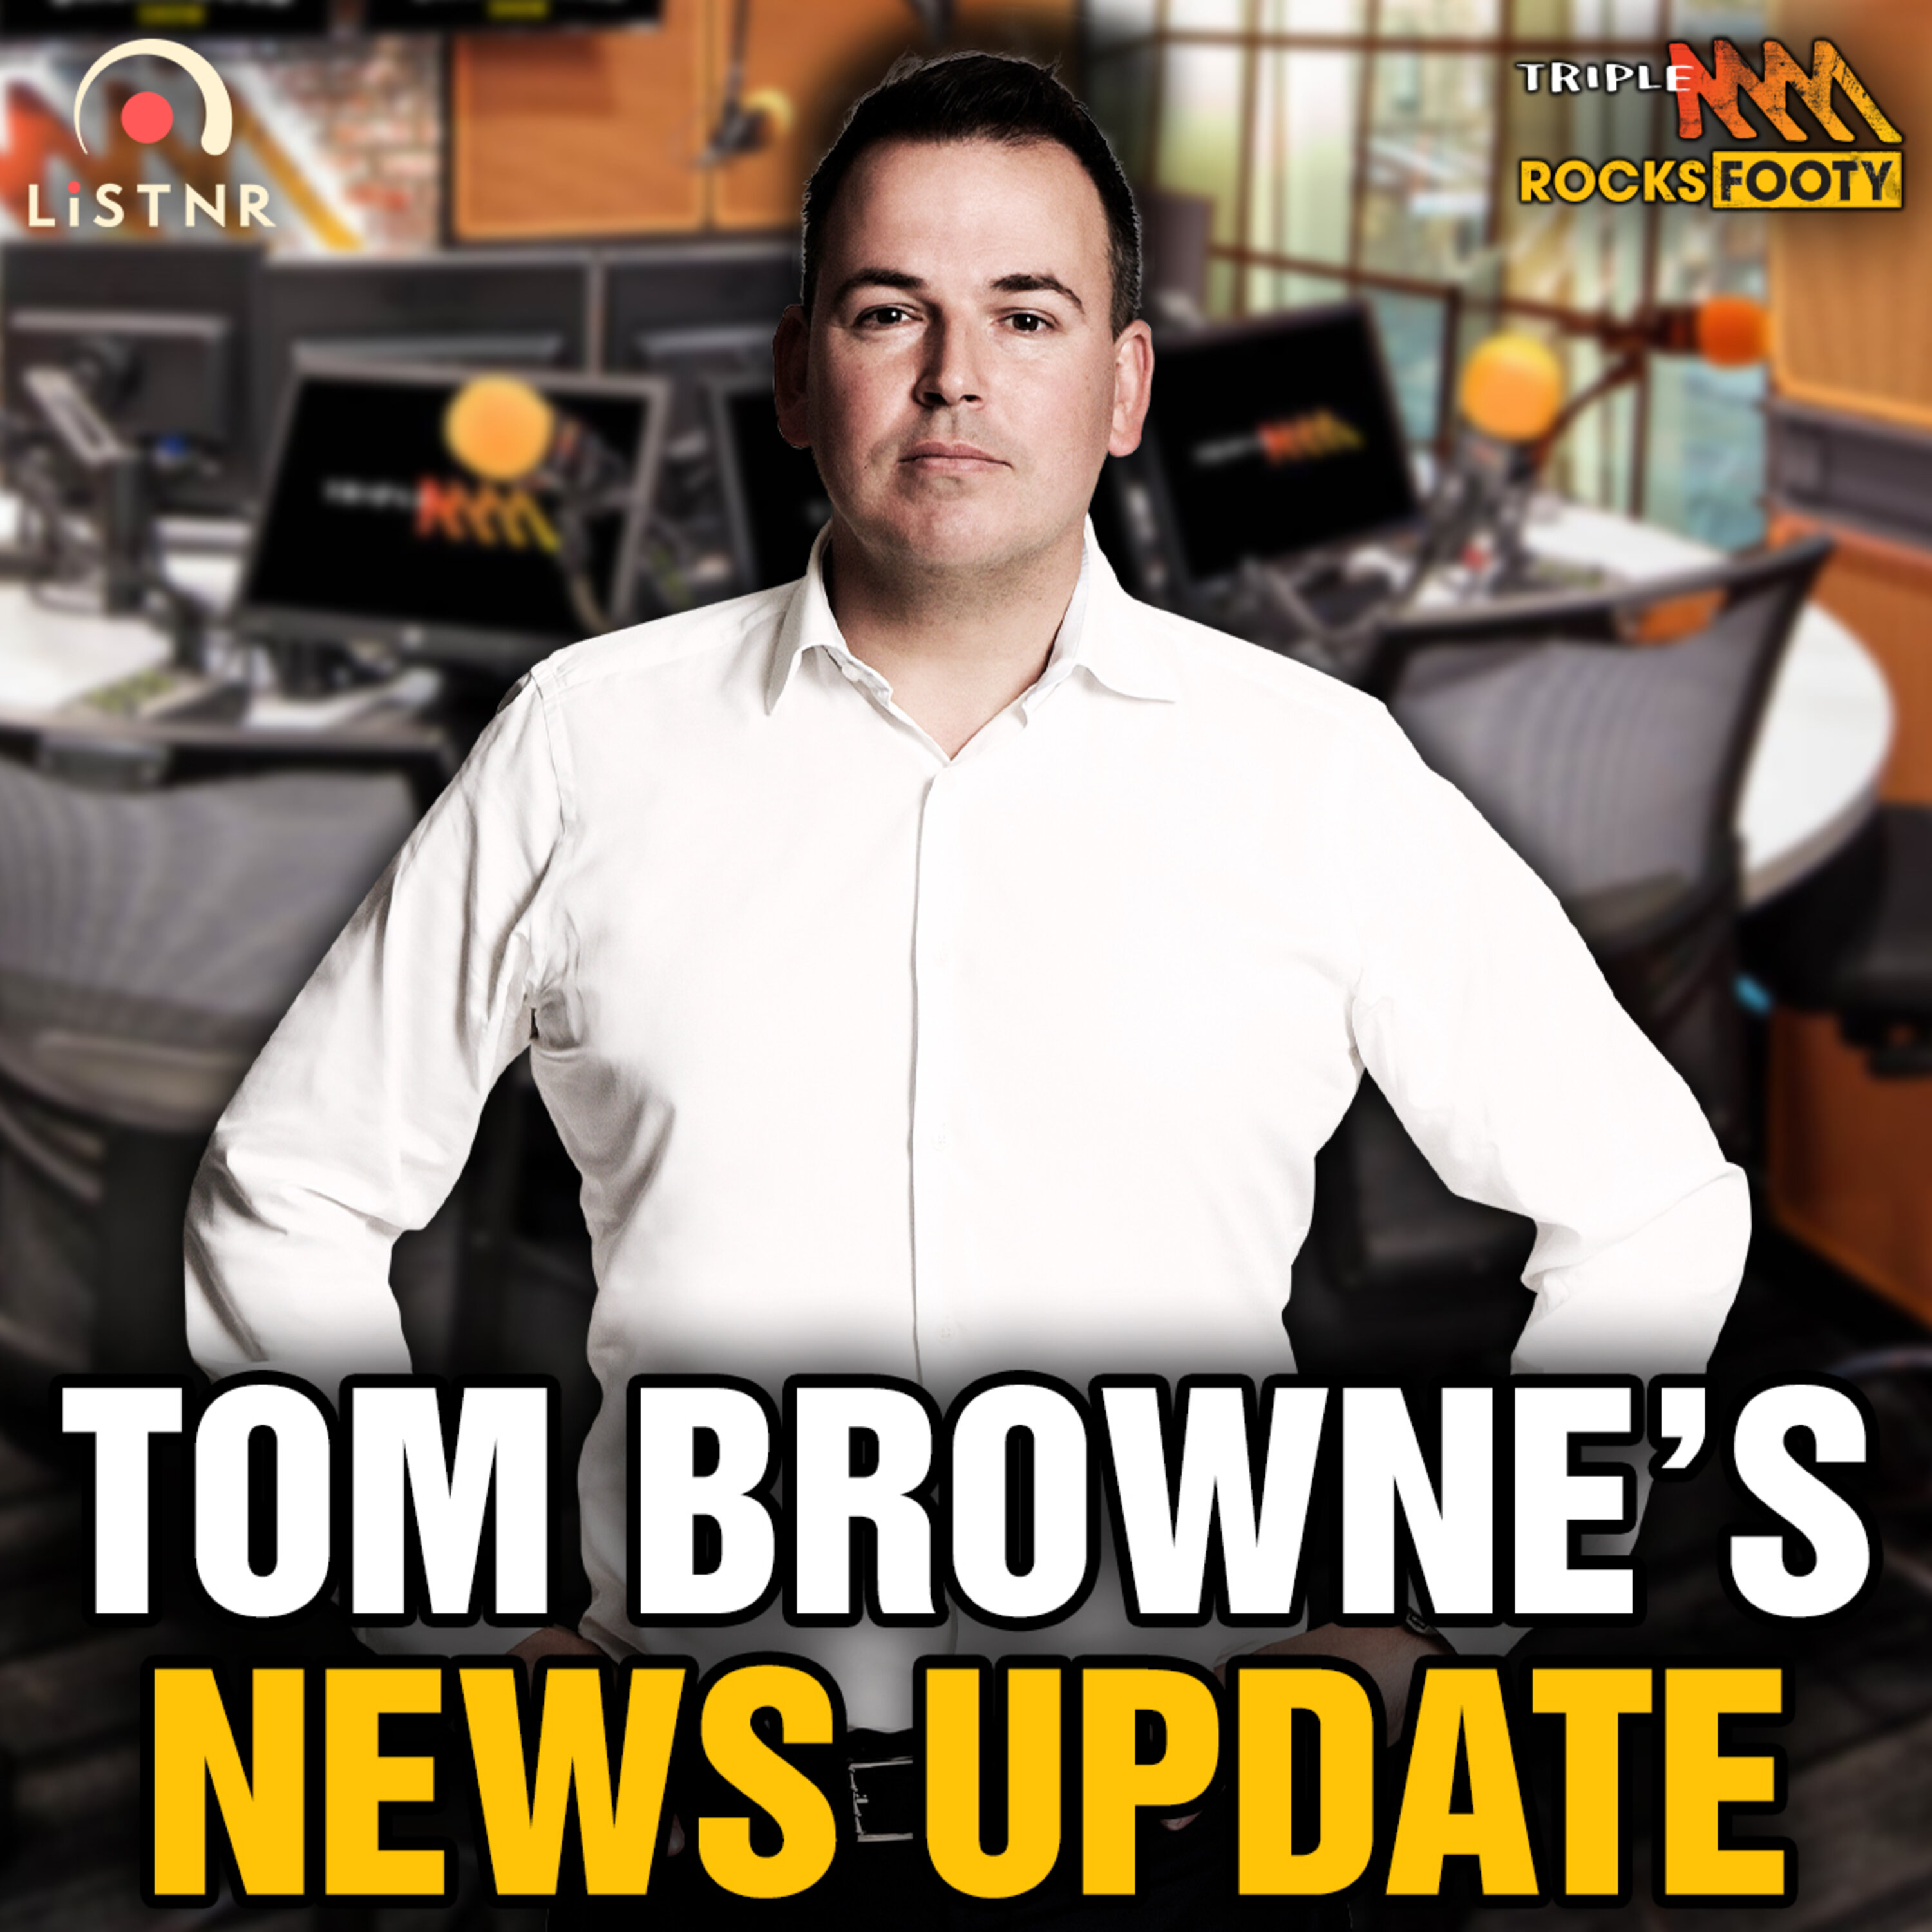 Tom Browne's News | Bevo's broken hand, latest on Harley Reid, Ratten v Riewoldt